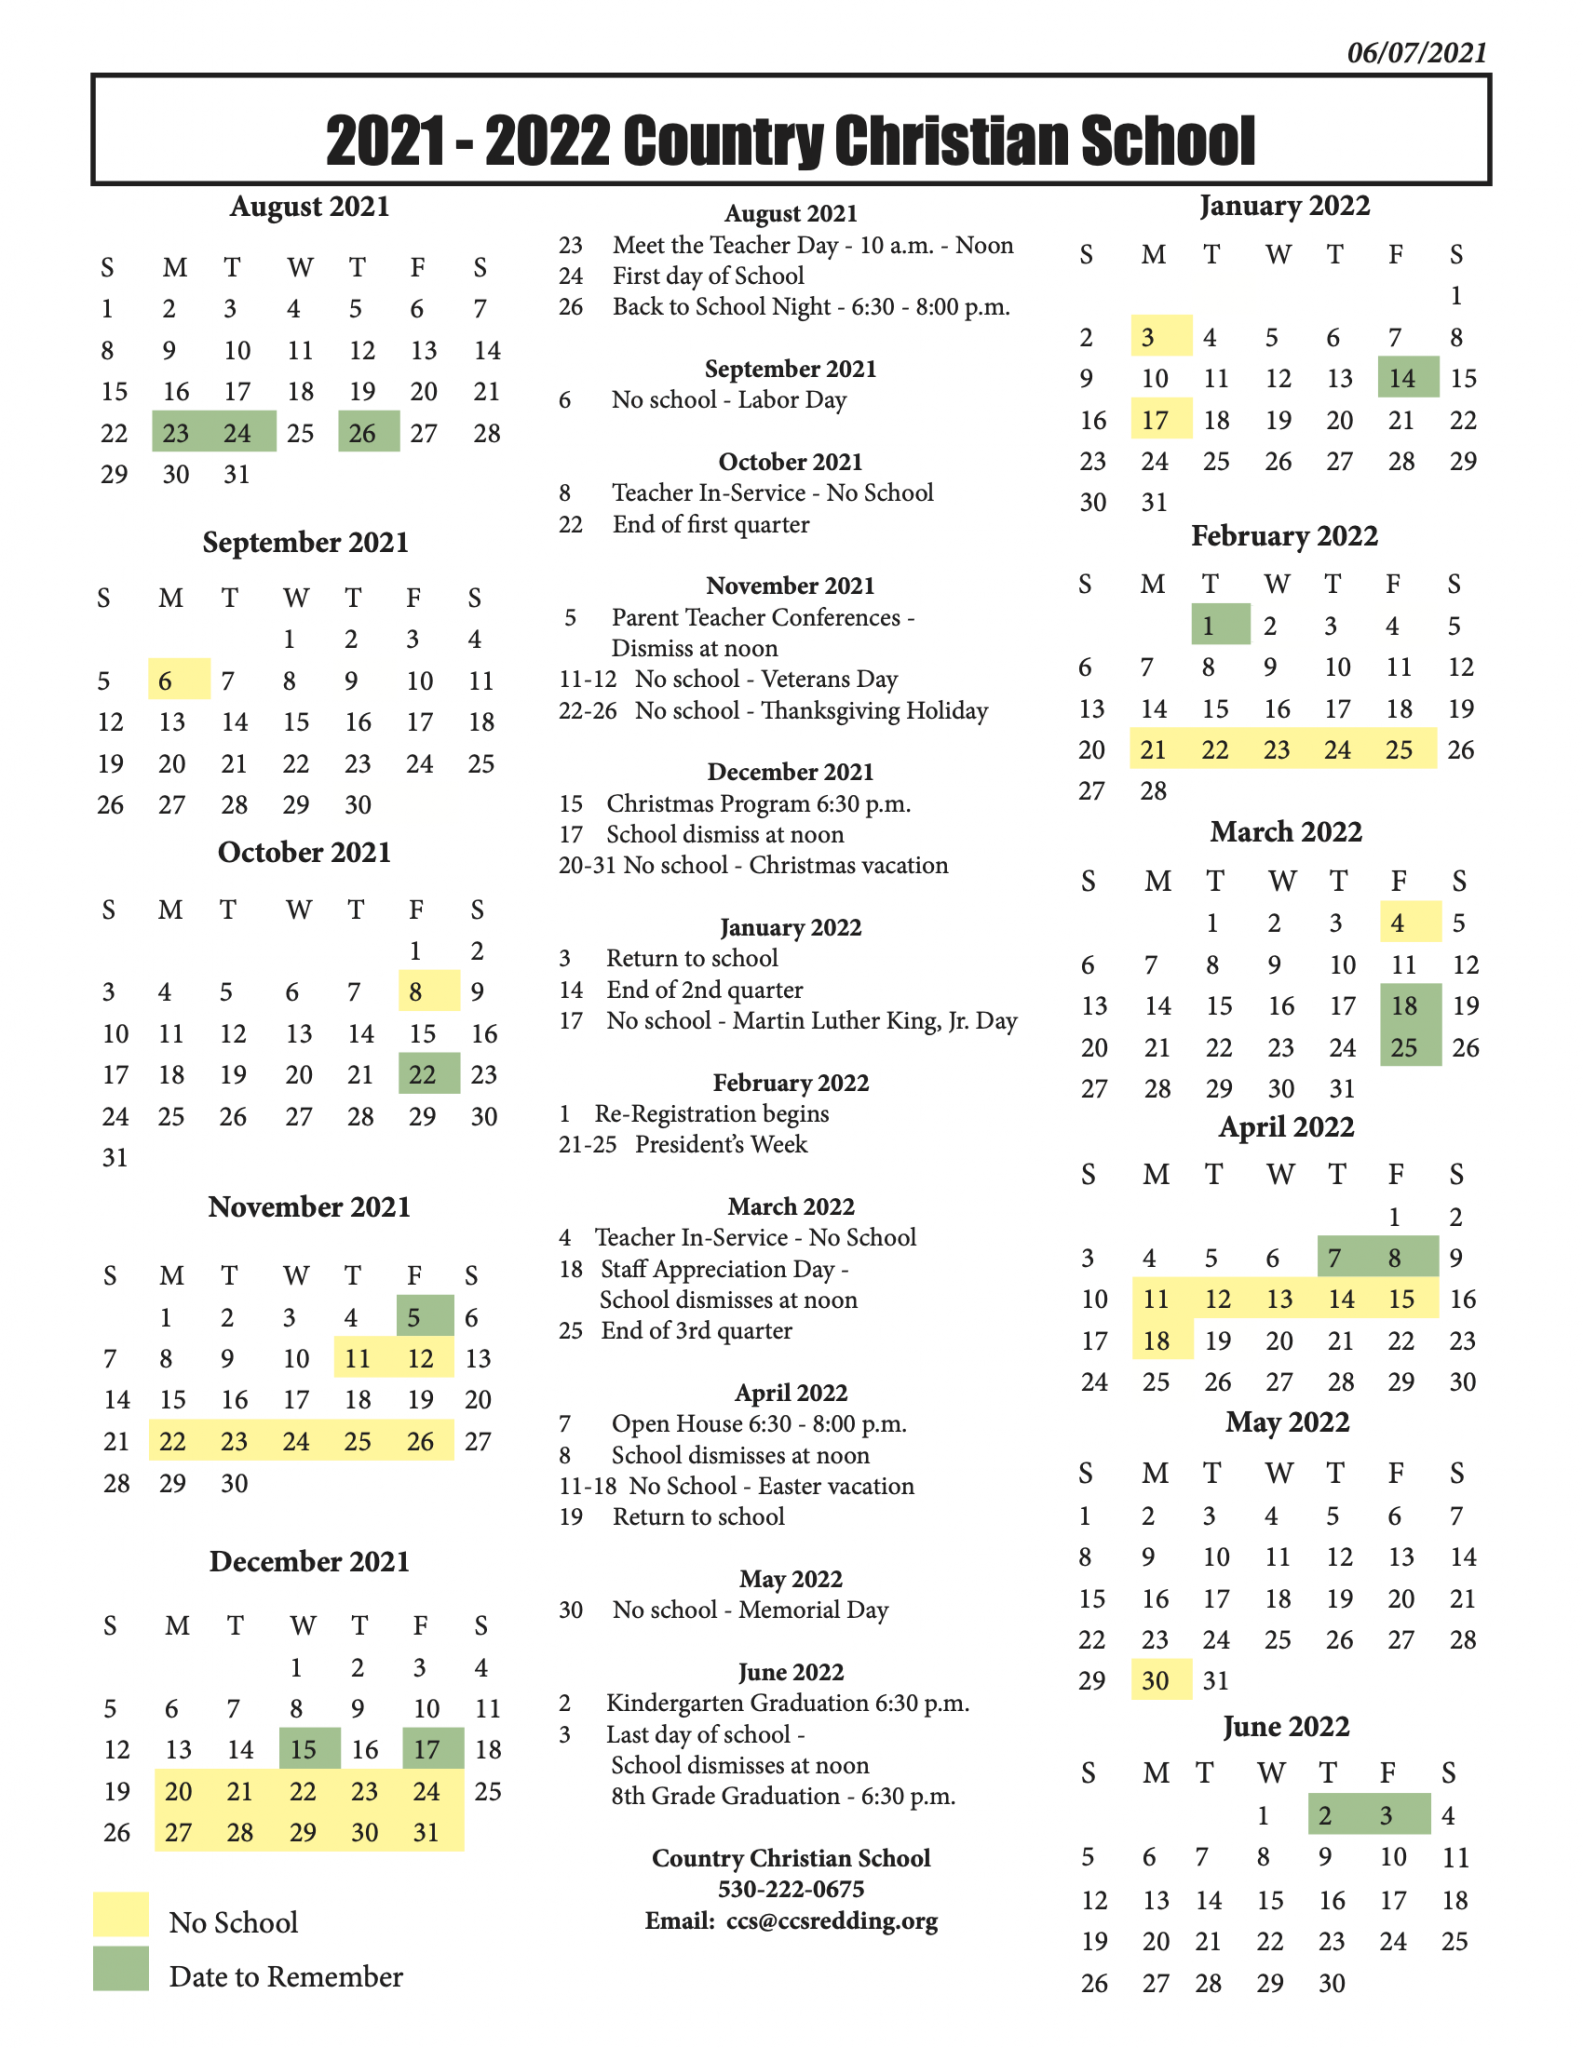 Annual Calendar Country Christian School